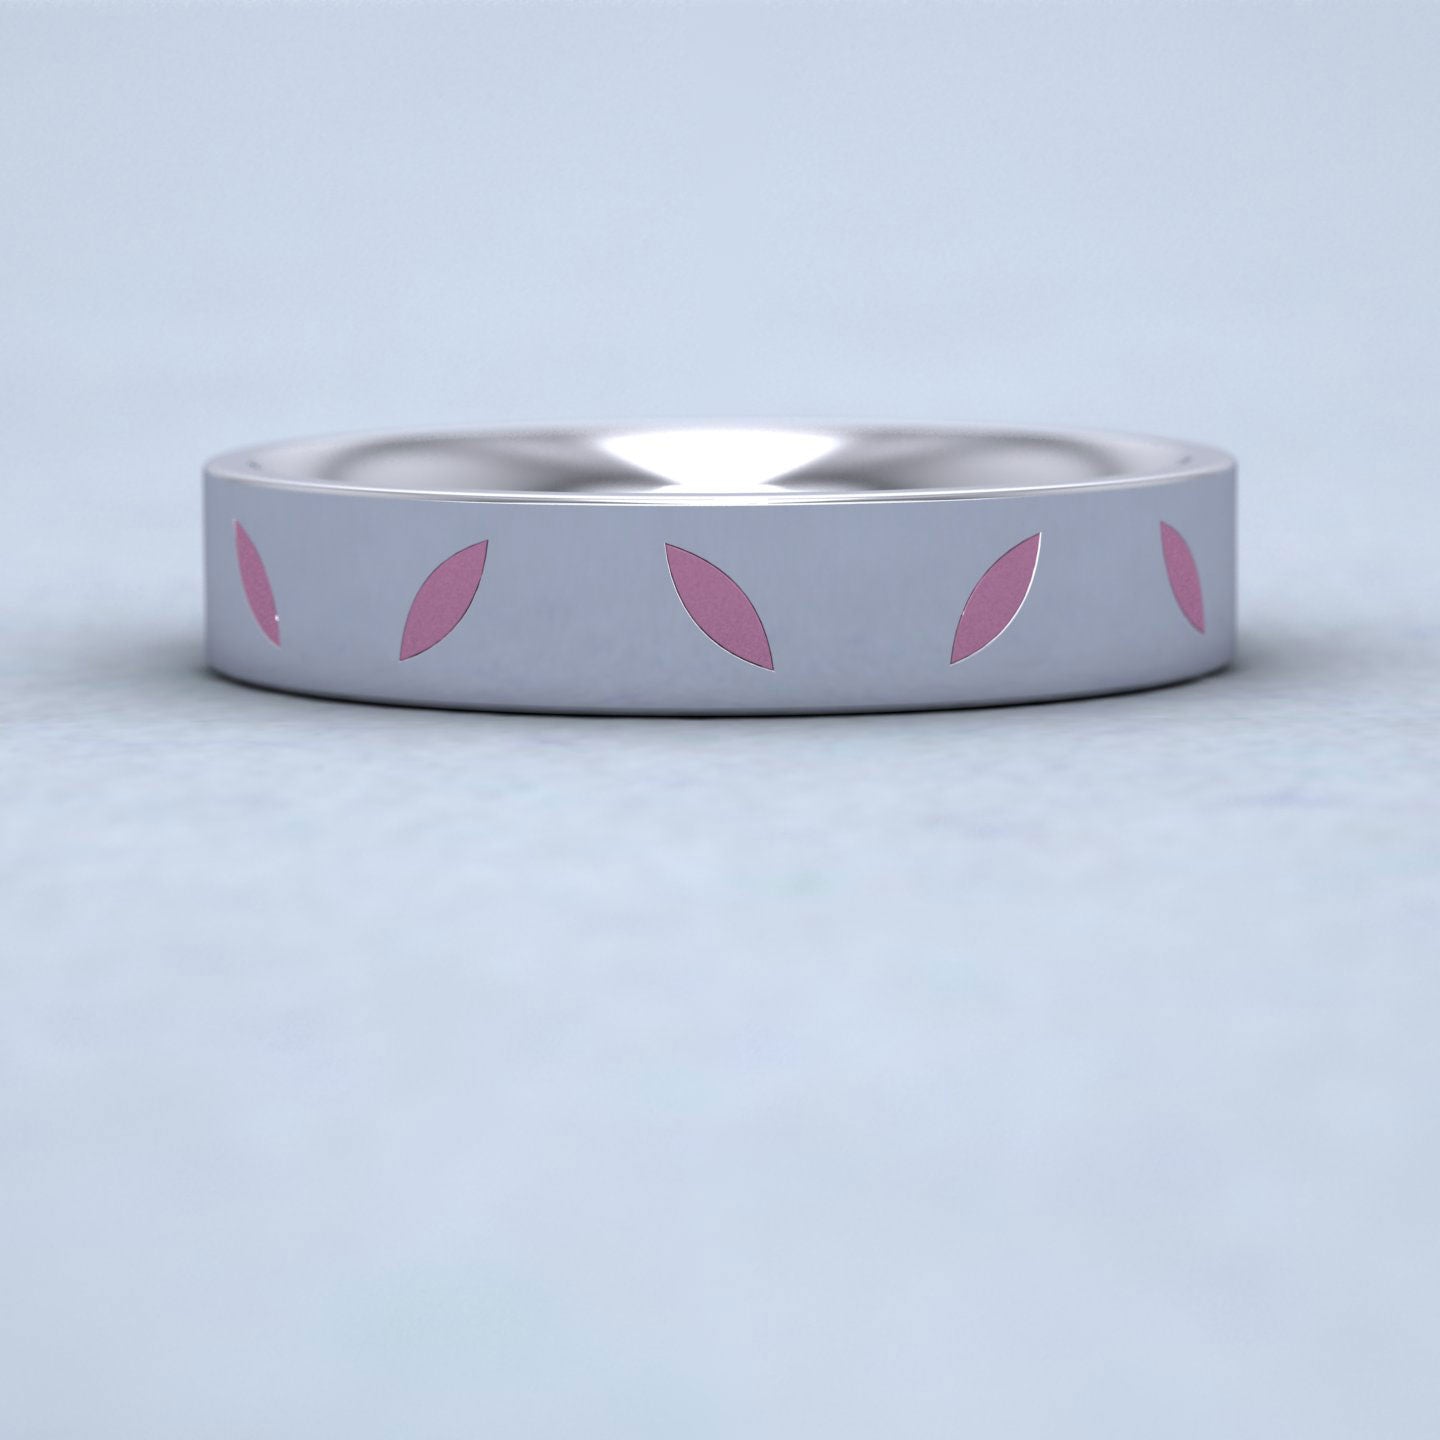 Pink Enamelled 9ct White Gold 4mm Wedding Ring